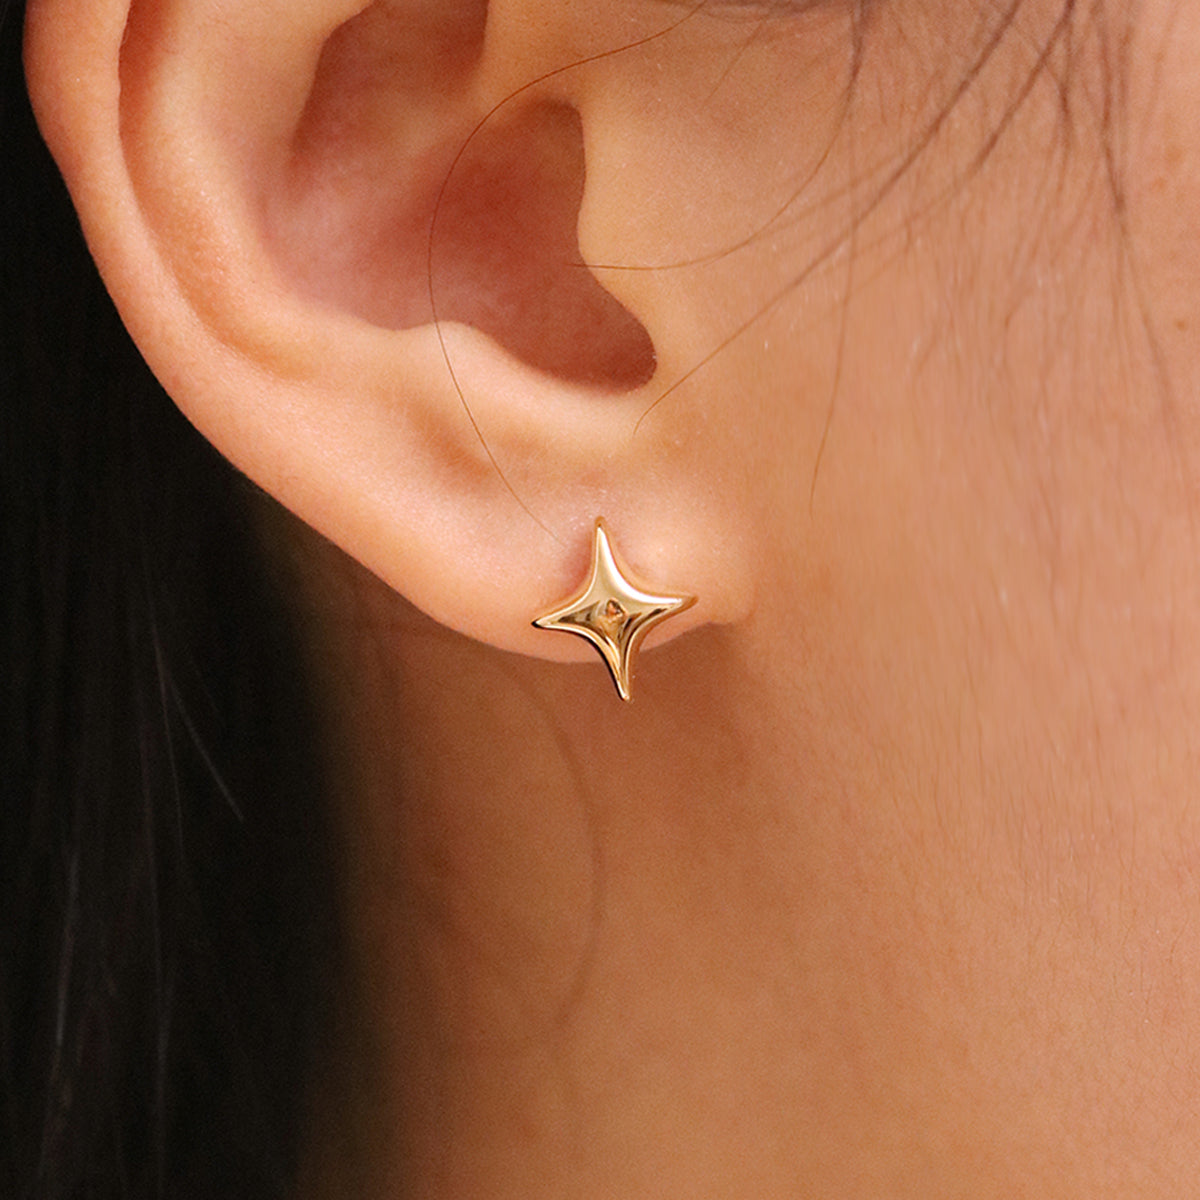 Stellar Bling Earrings